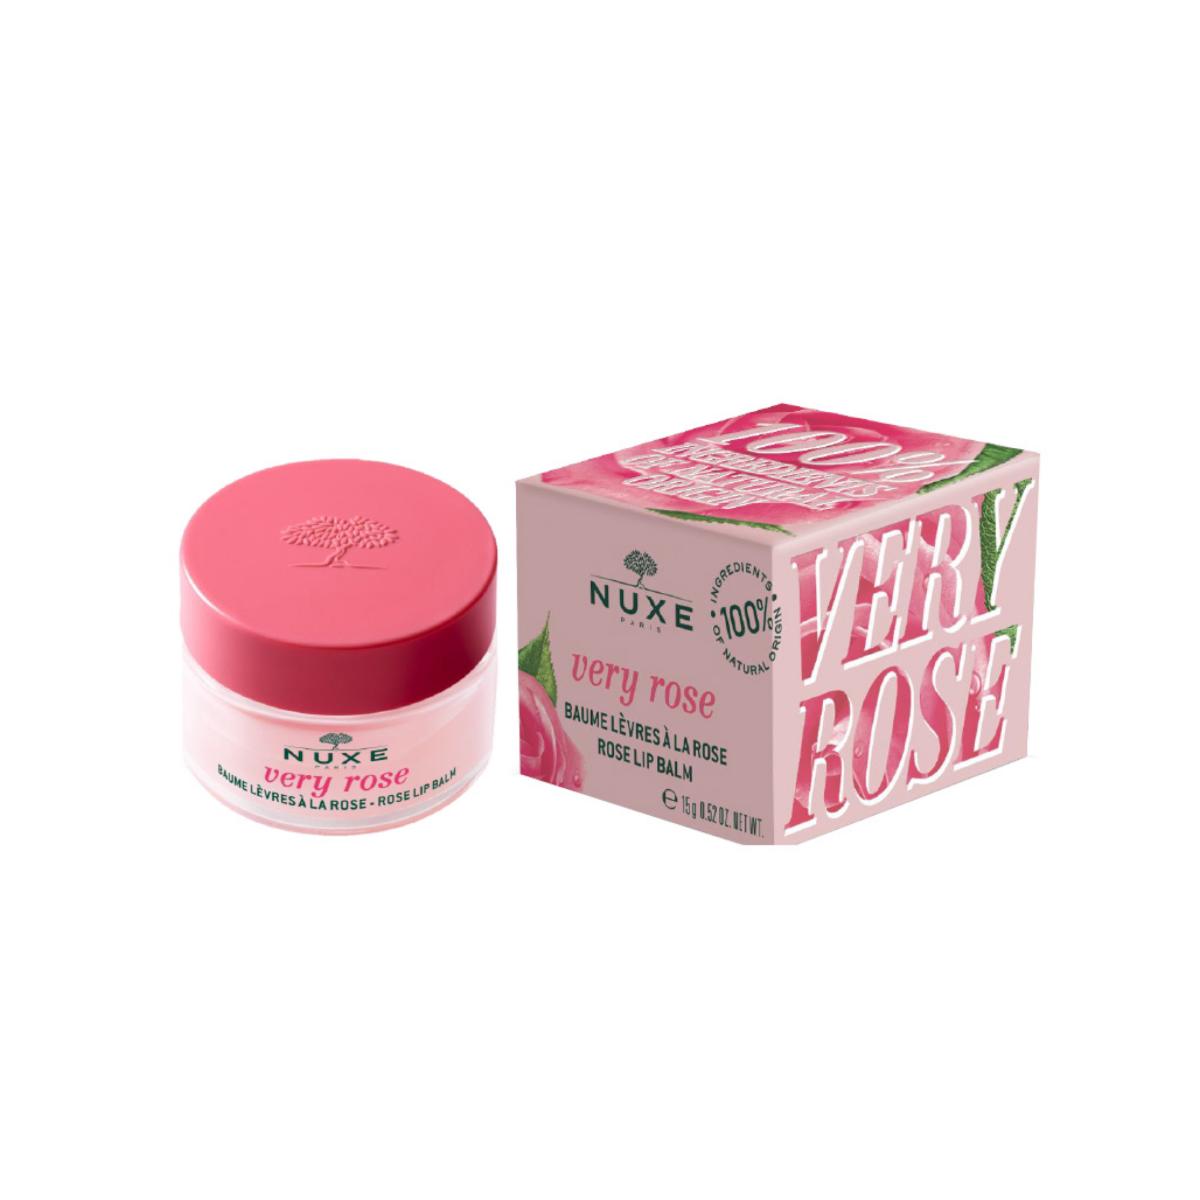 بالم لب رز  - Very rose lip balm